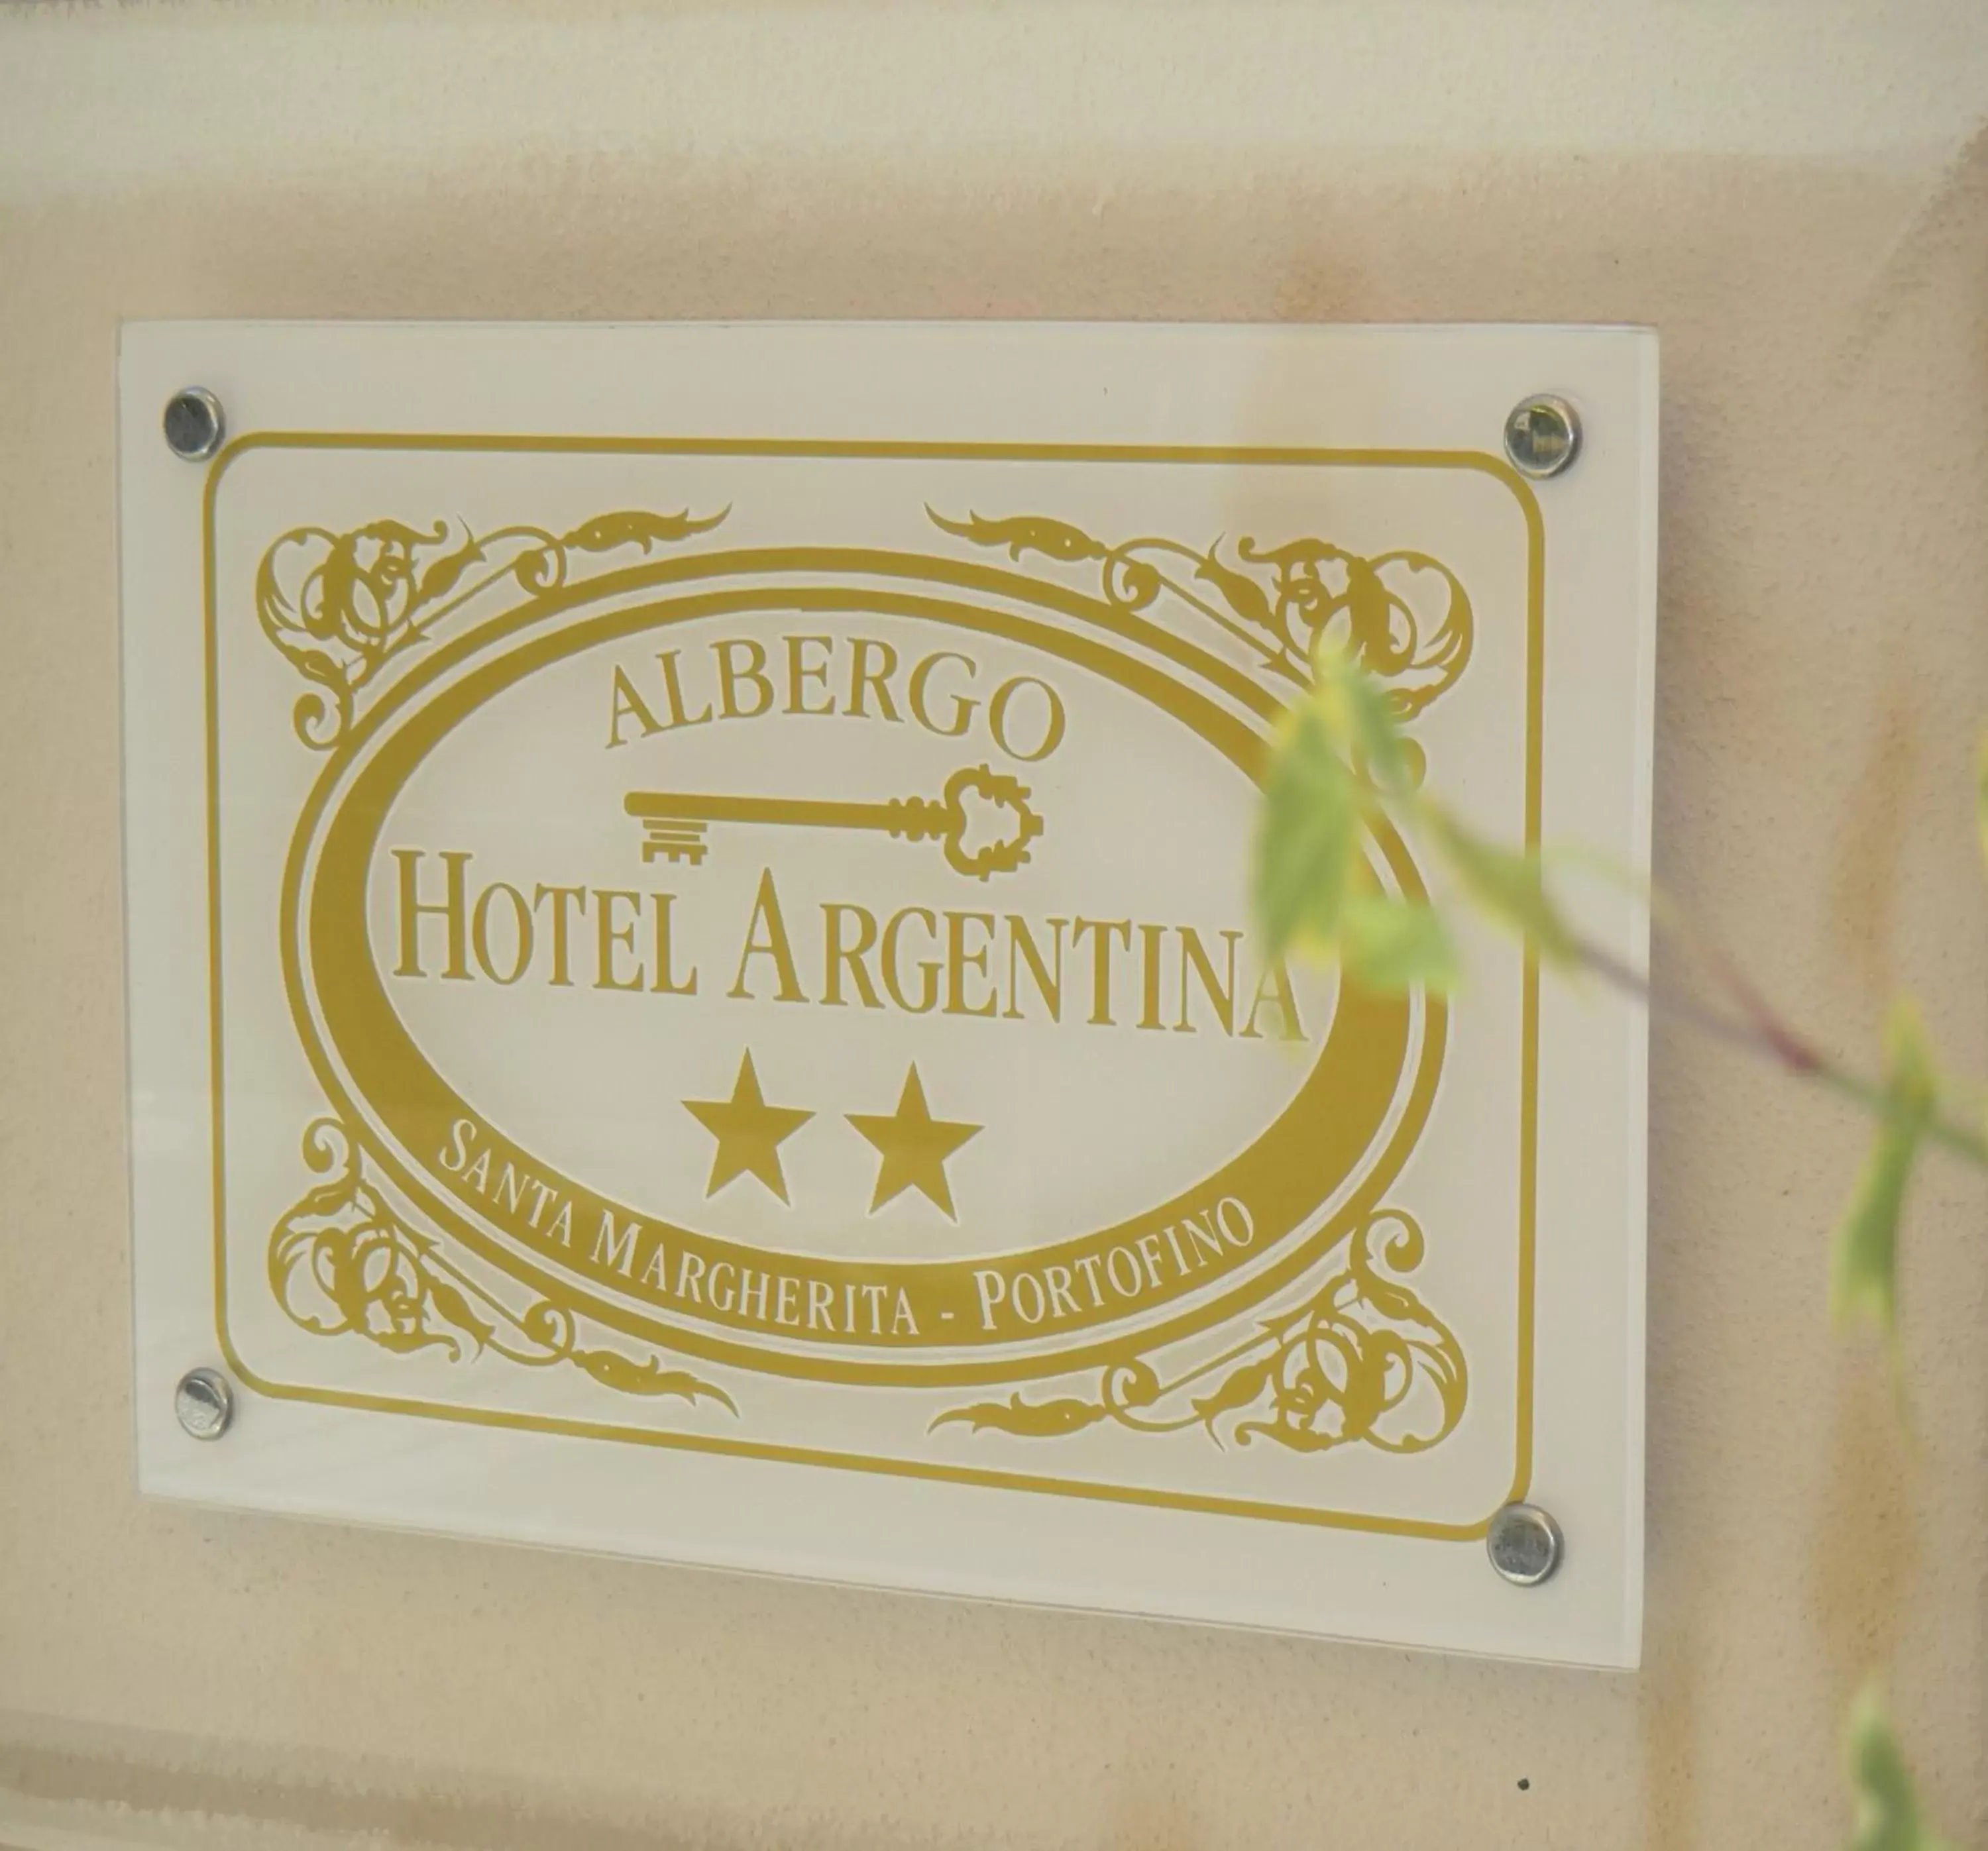 Facade/entrance in Hotel Argentina